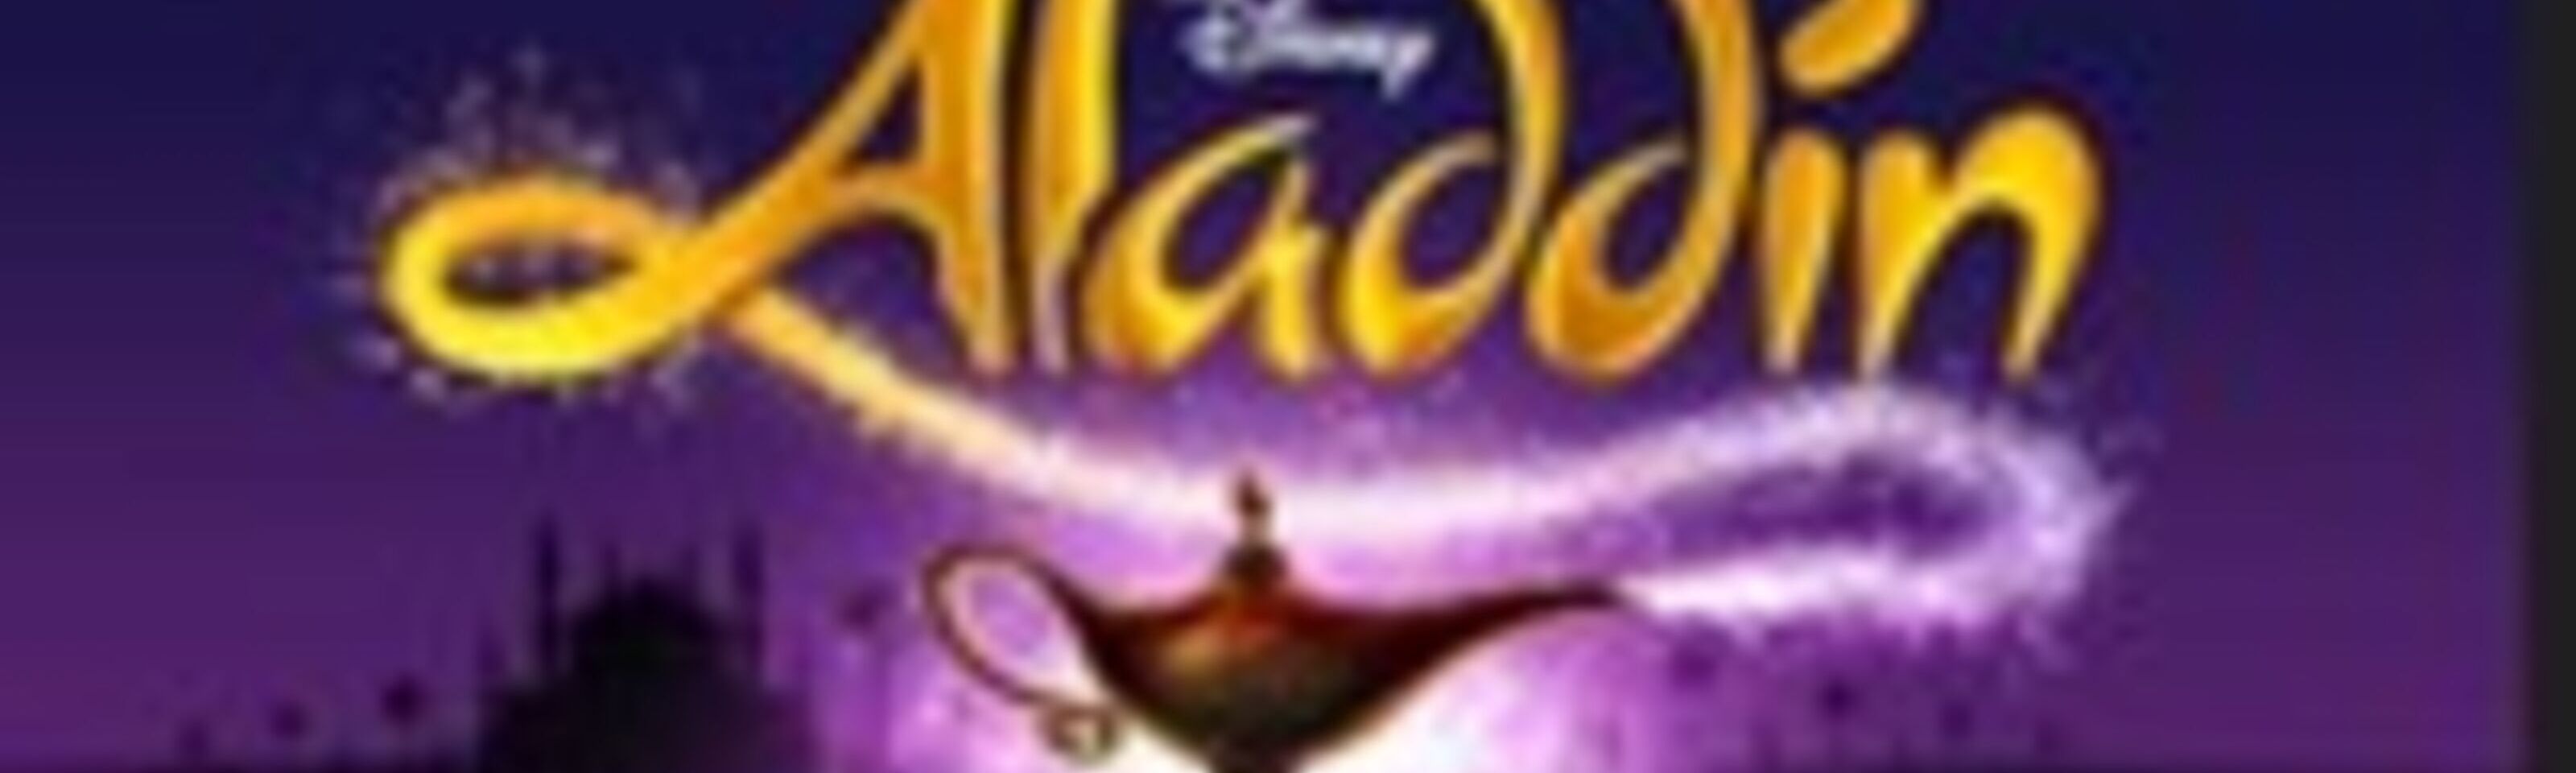 Duplicate: Walt Disney's Aladdin at the Palace Theatre, Manchester